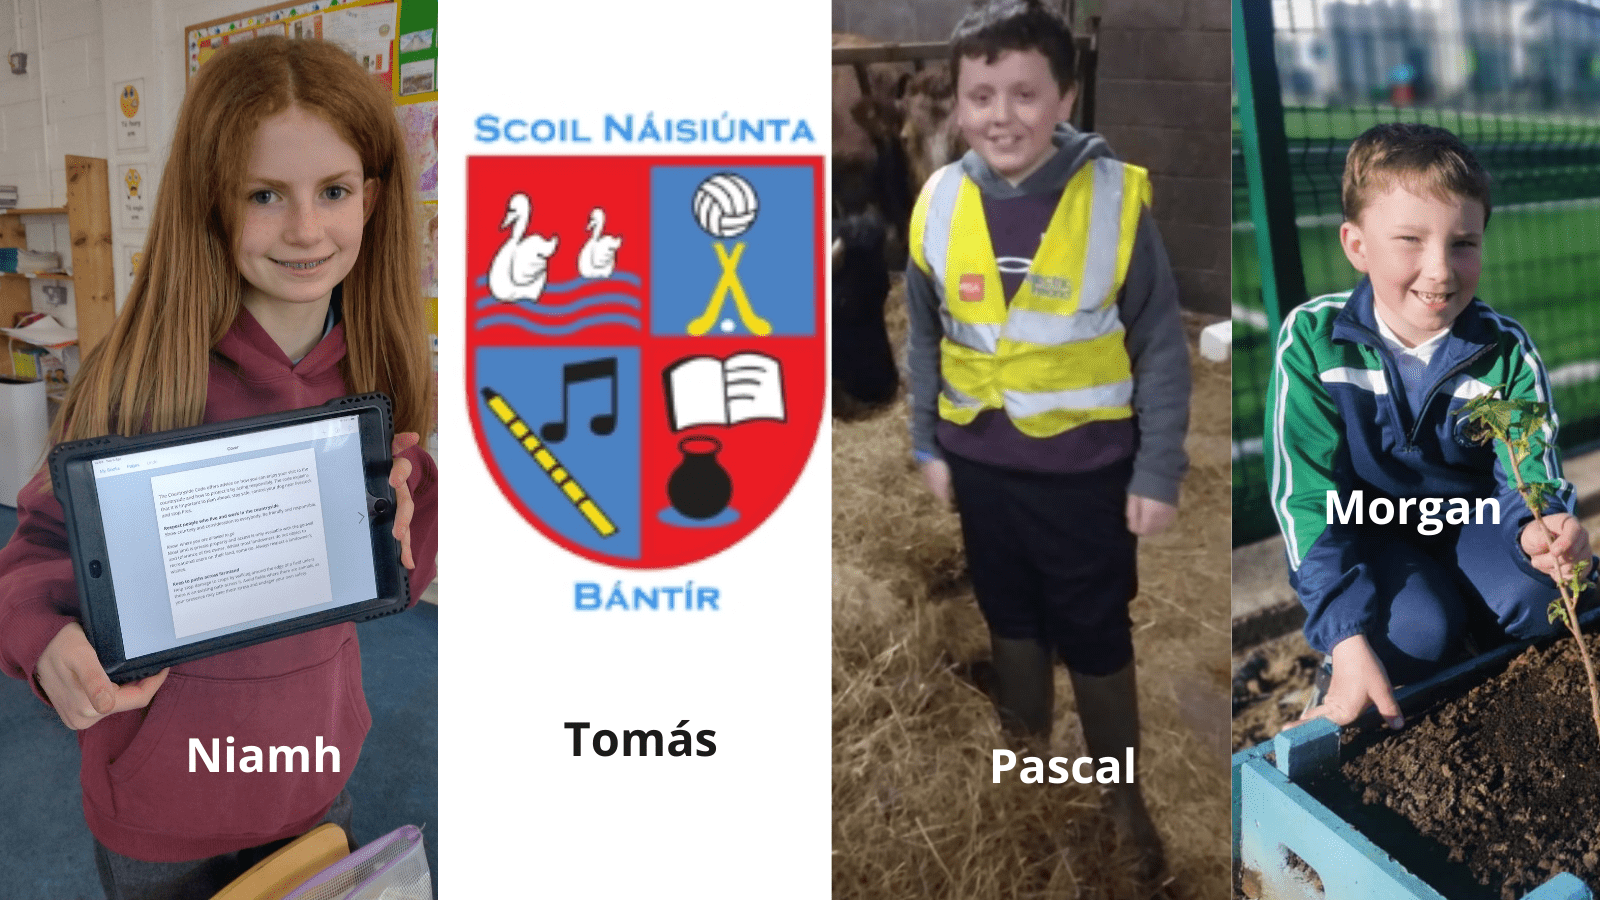 Meet our latest Farm Safe Schools Regional Winners